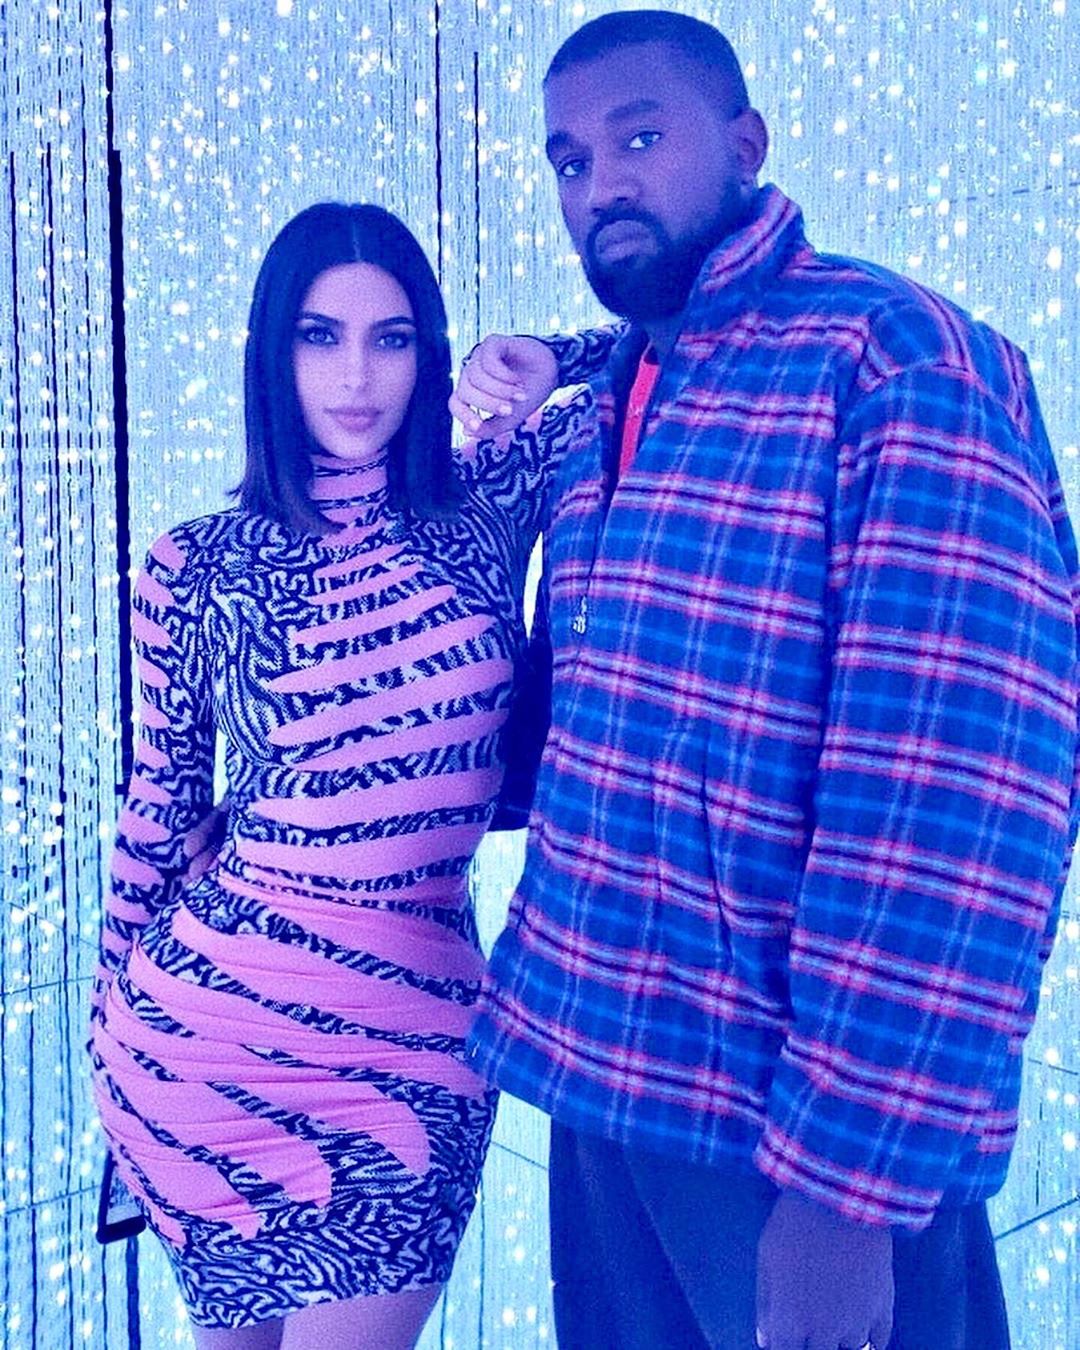 SPOTTED: Kanye West & Kim Kardashian visit teamLab Borderless, Tokyo